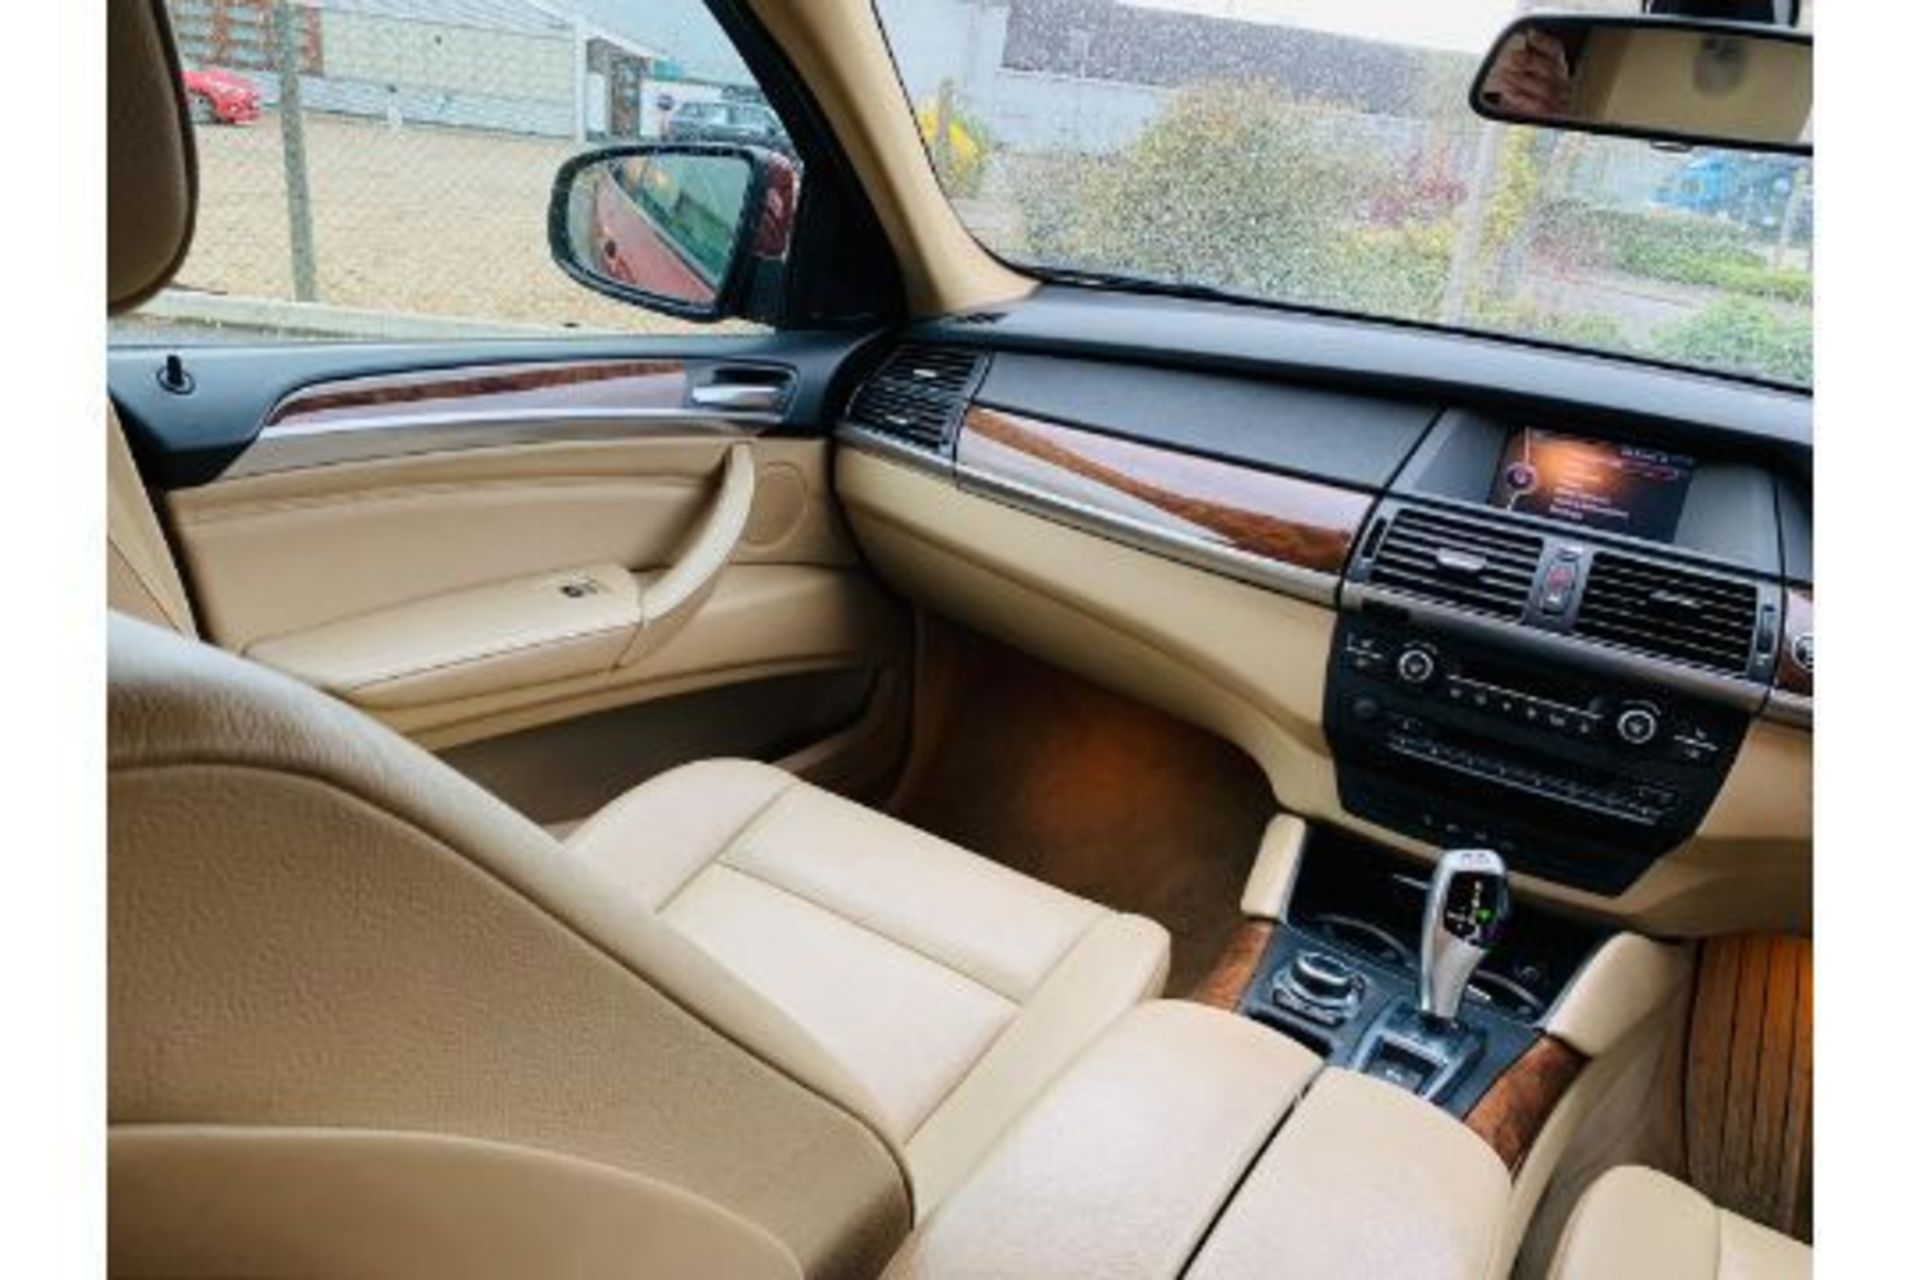 (RESERVE MET) BMW X6 xDrive 3.0d Auto - 2014 Reg - Leather Interior -Parking Sensors - Reversing Cam - Image 11 of 29